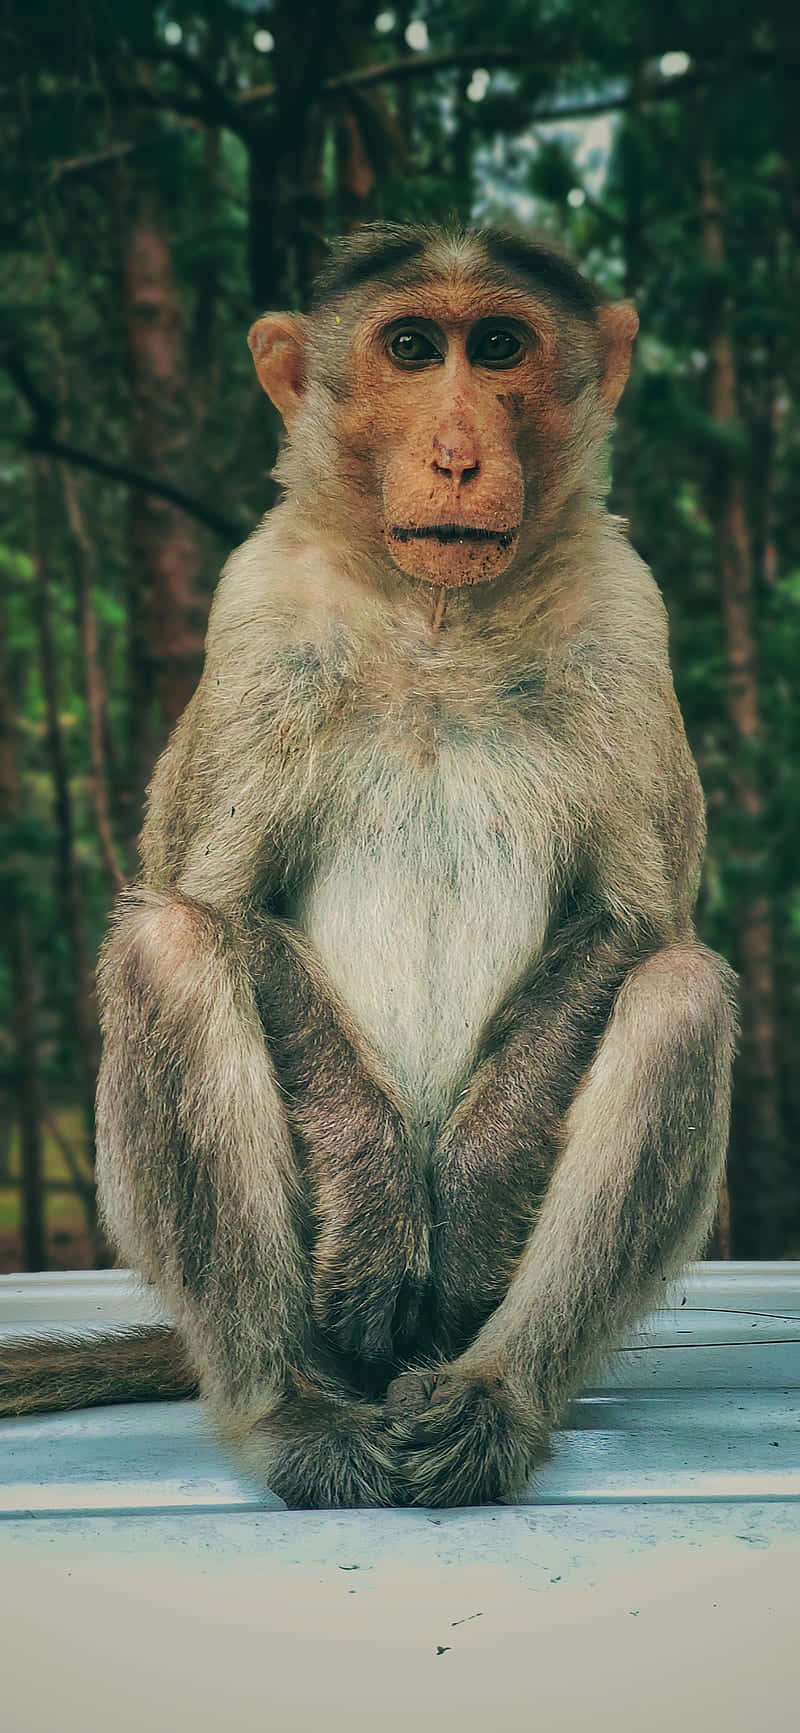 Monkey Background